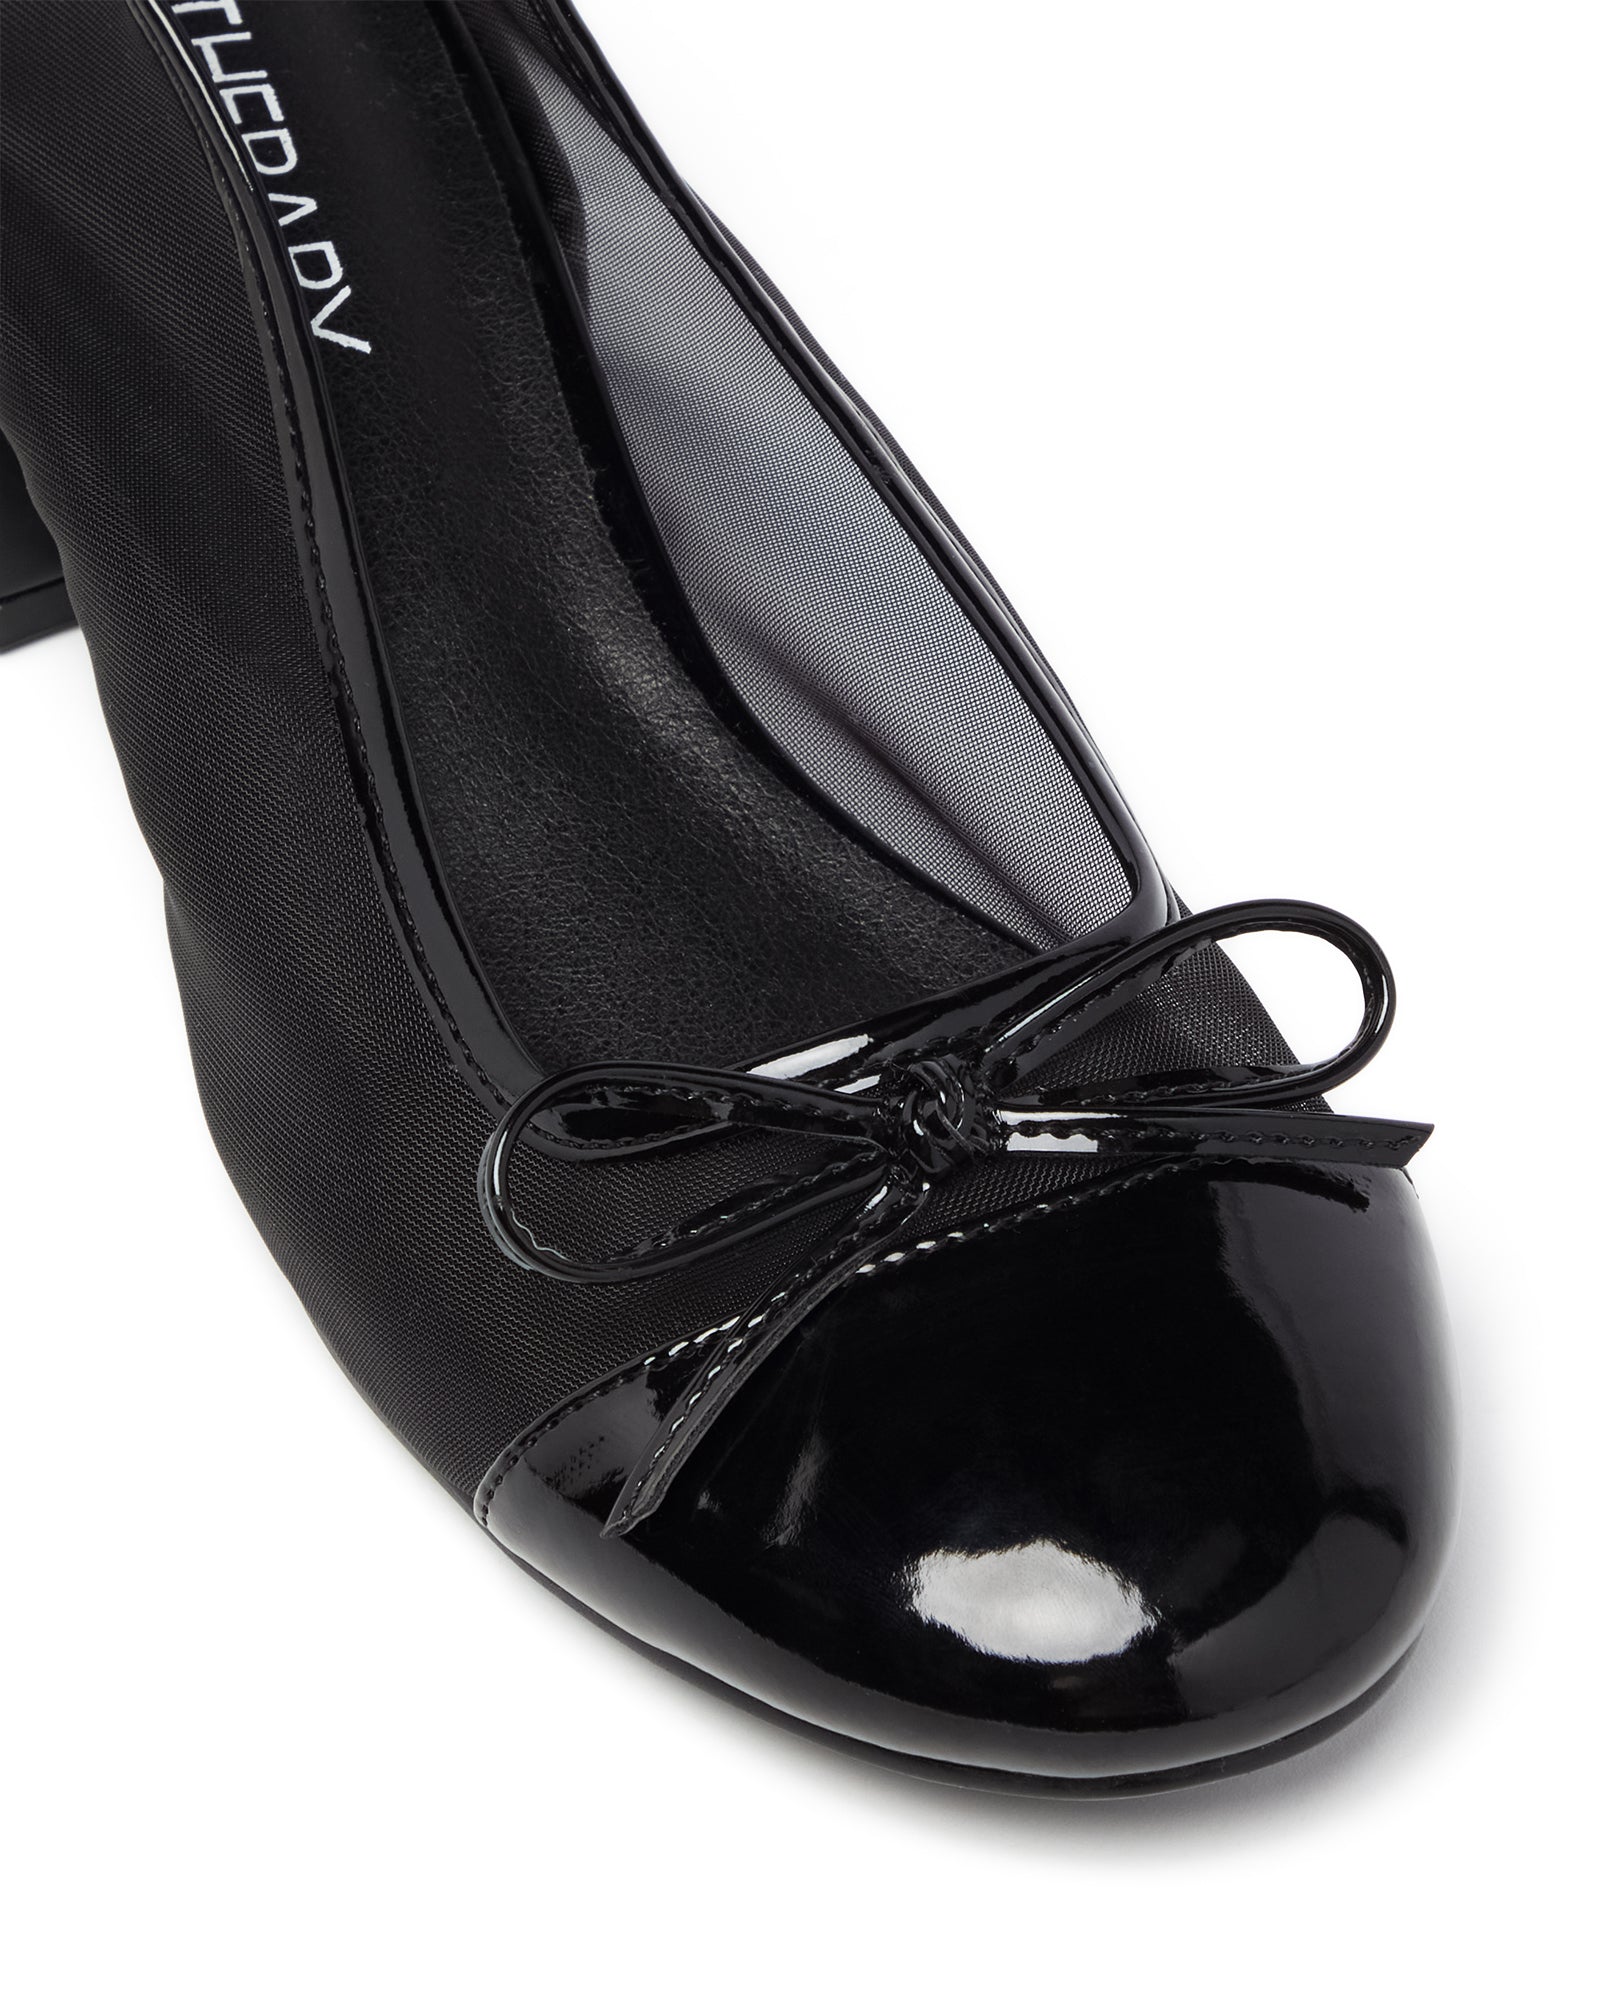 Therapy Shoes Charlotte Black Patent | Women's Ballet | Heels | Mesh